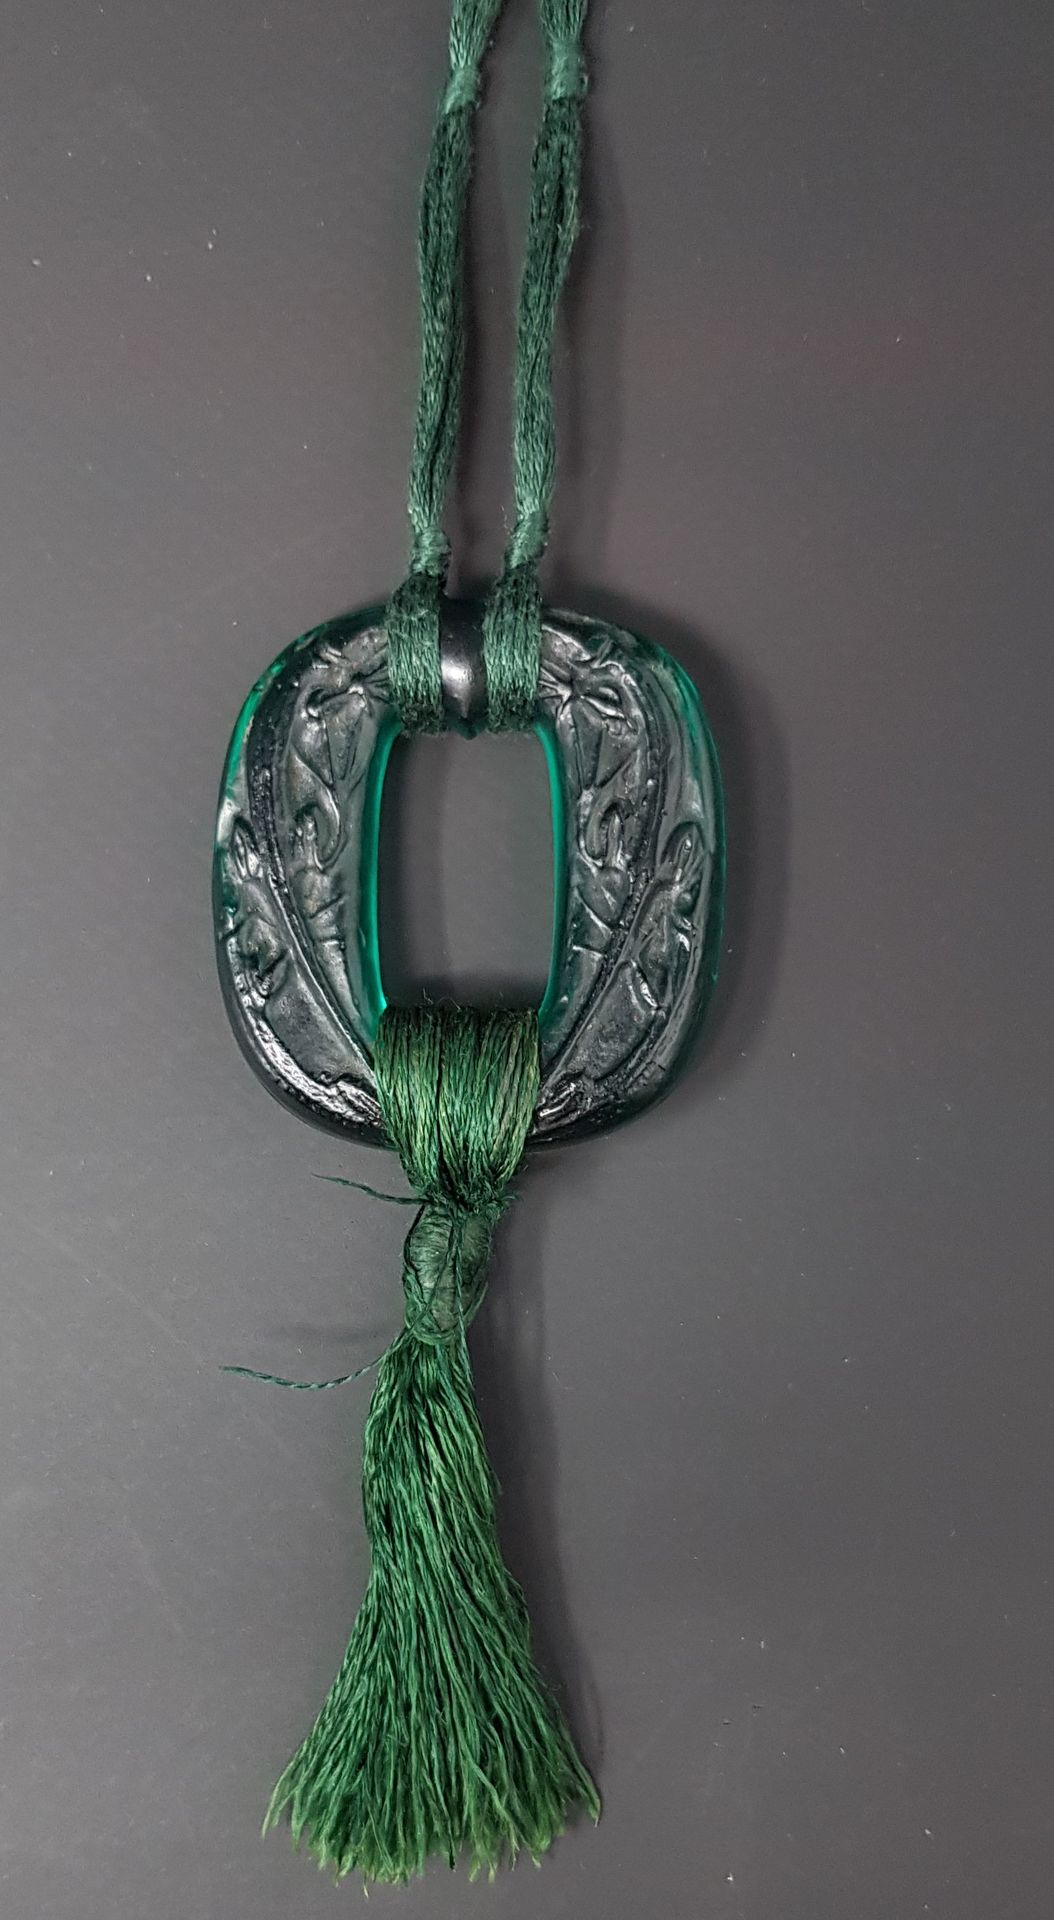 René Lalique (1860-1945) 
"Lézards "吊坠，创作于1920年，绿色模制玻璃，丝绳，高4.5厘米，签名：R. LALIQUE

&hellip;